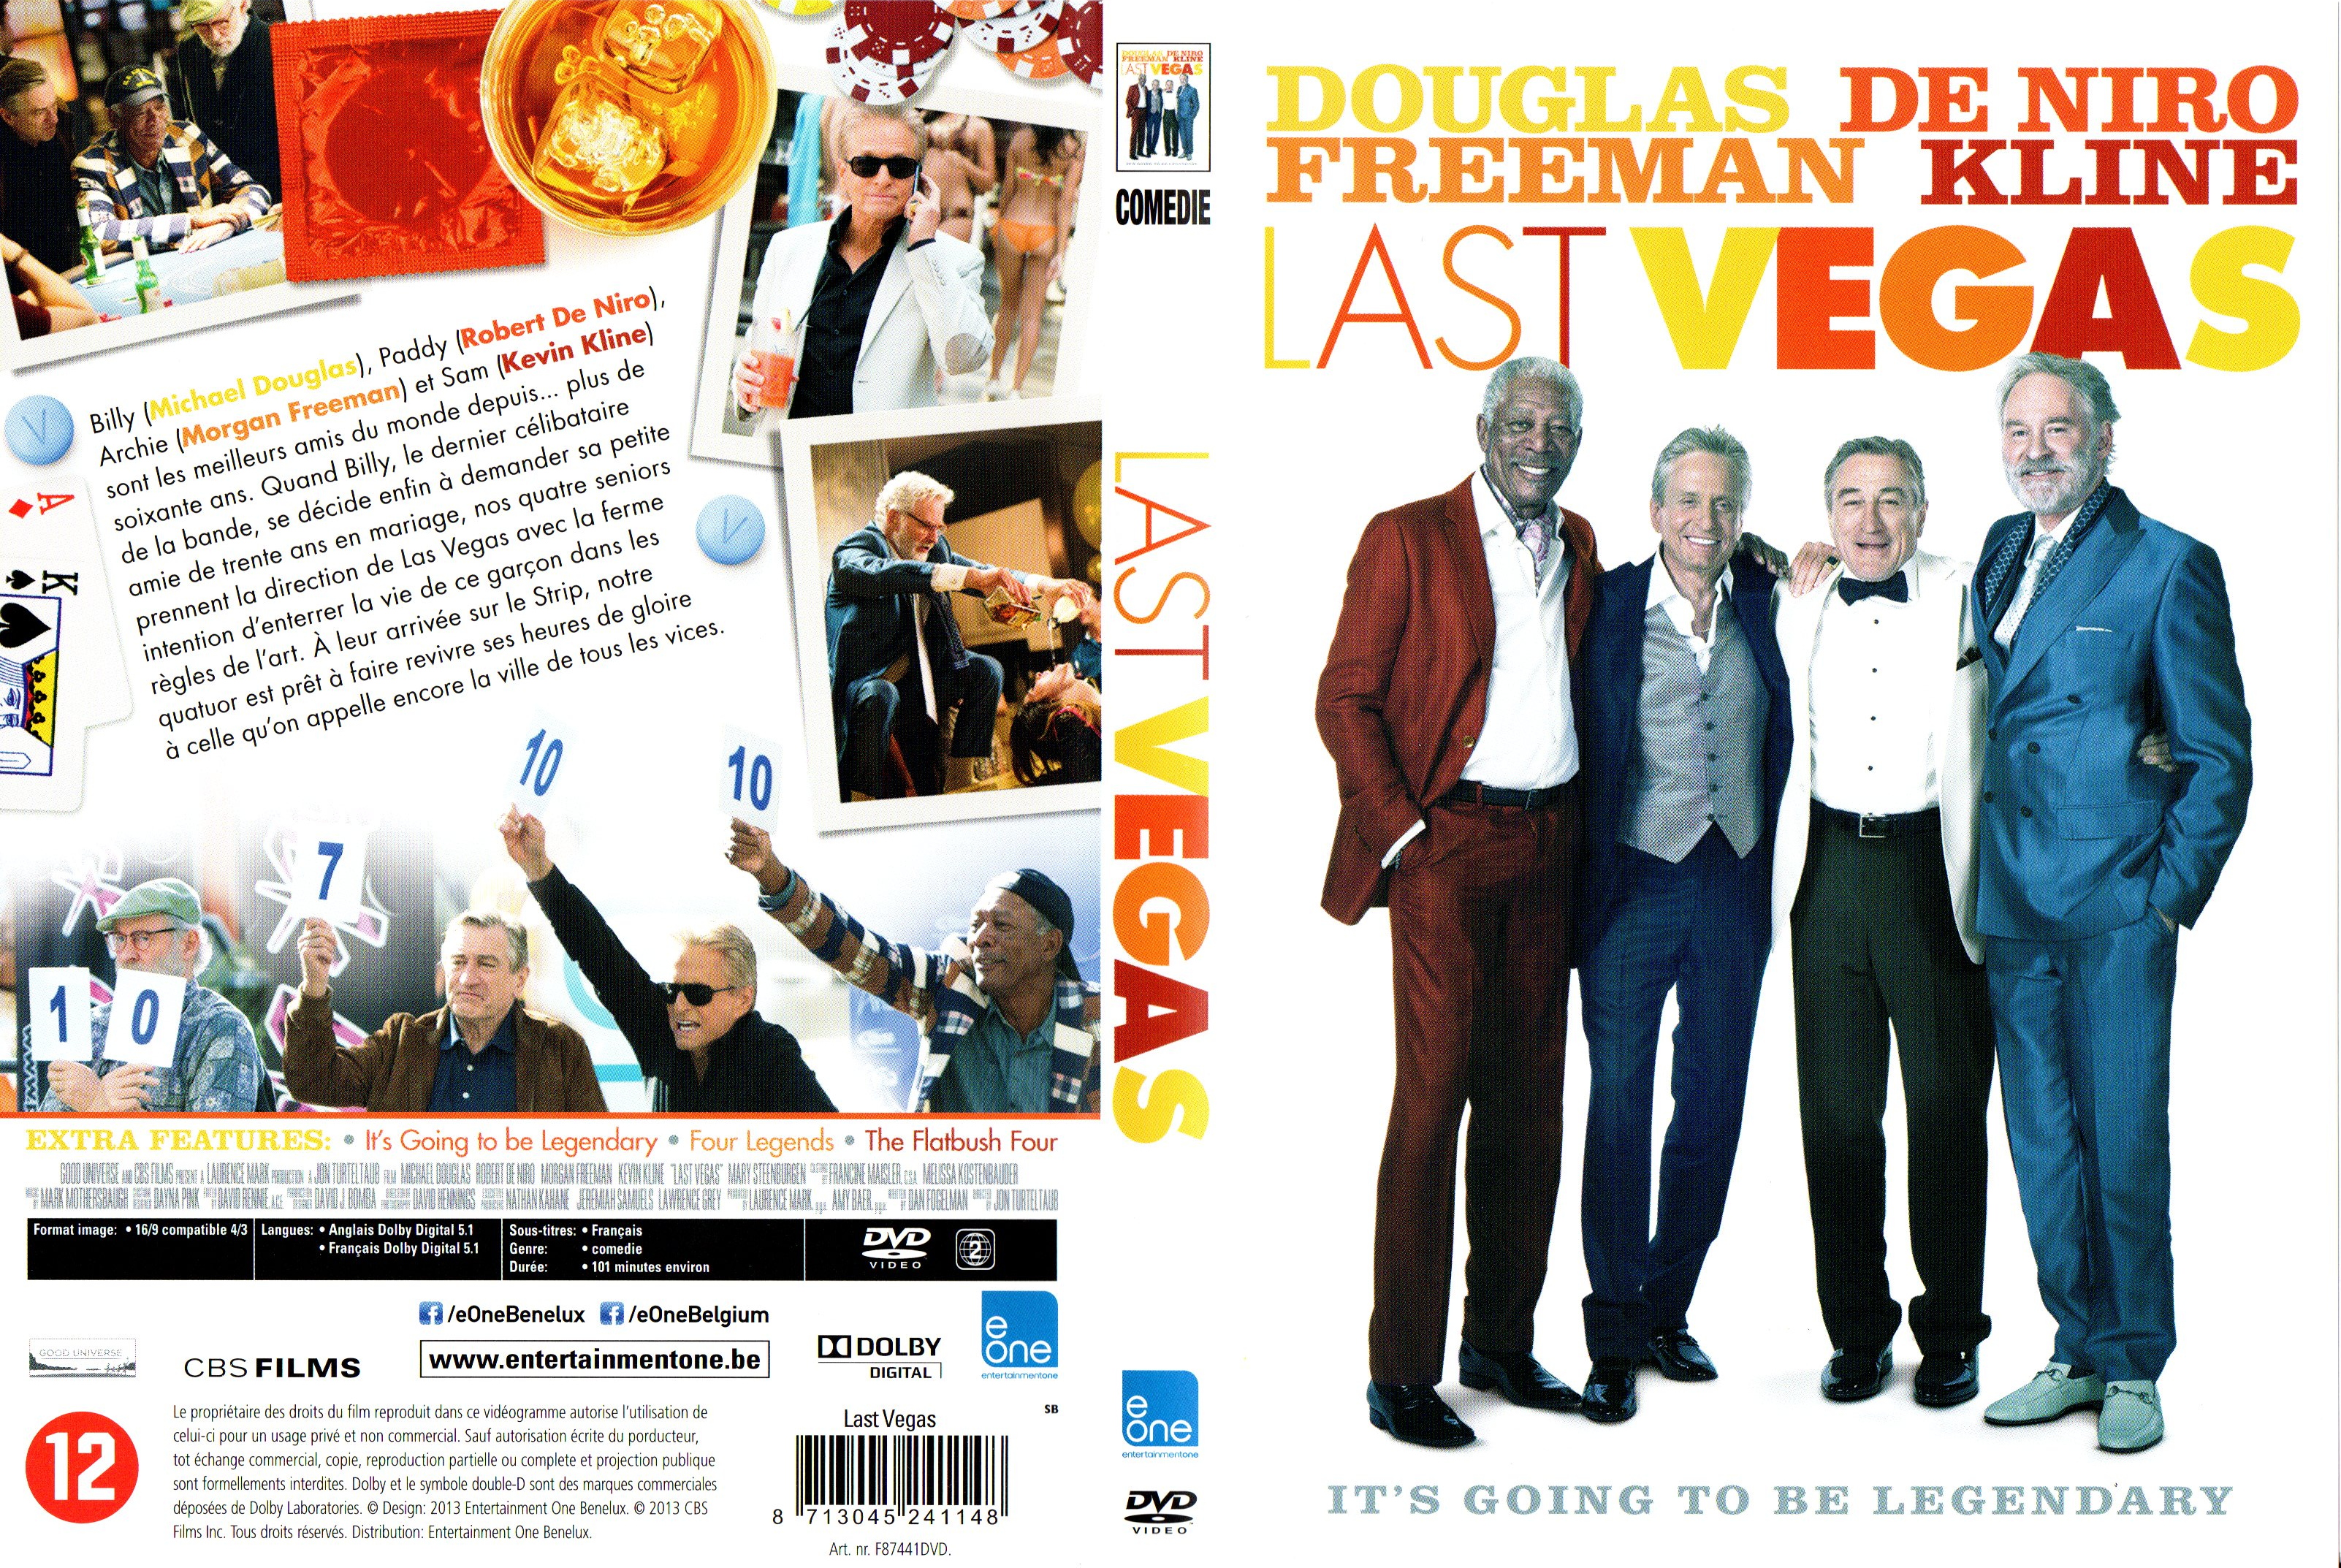 Jaquette DVD Last Vegas v2